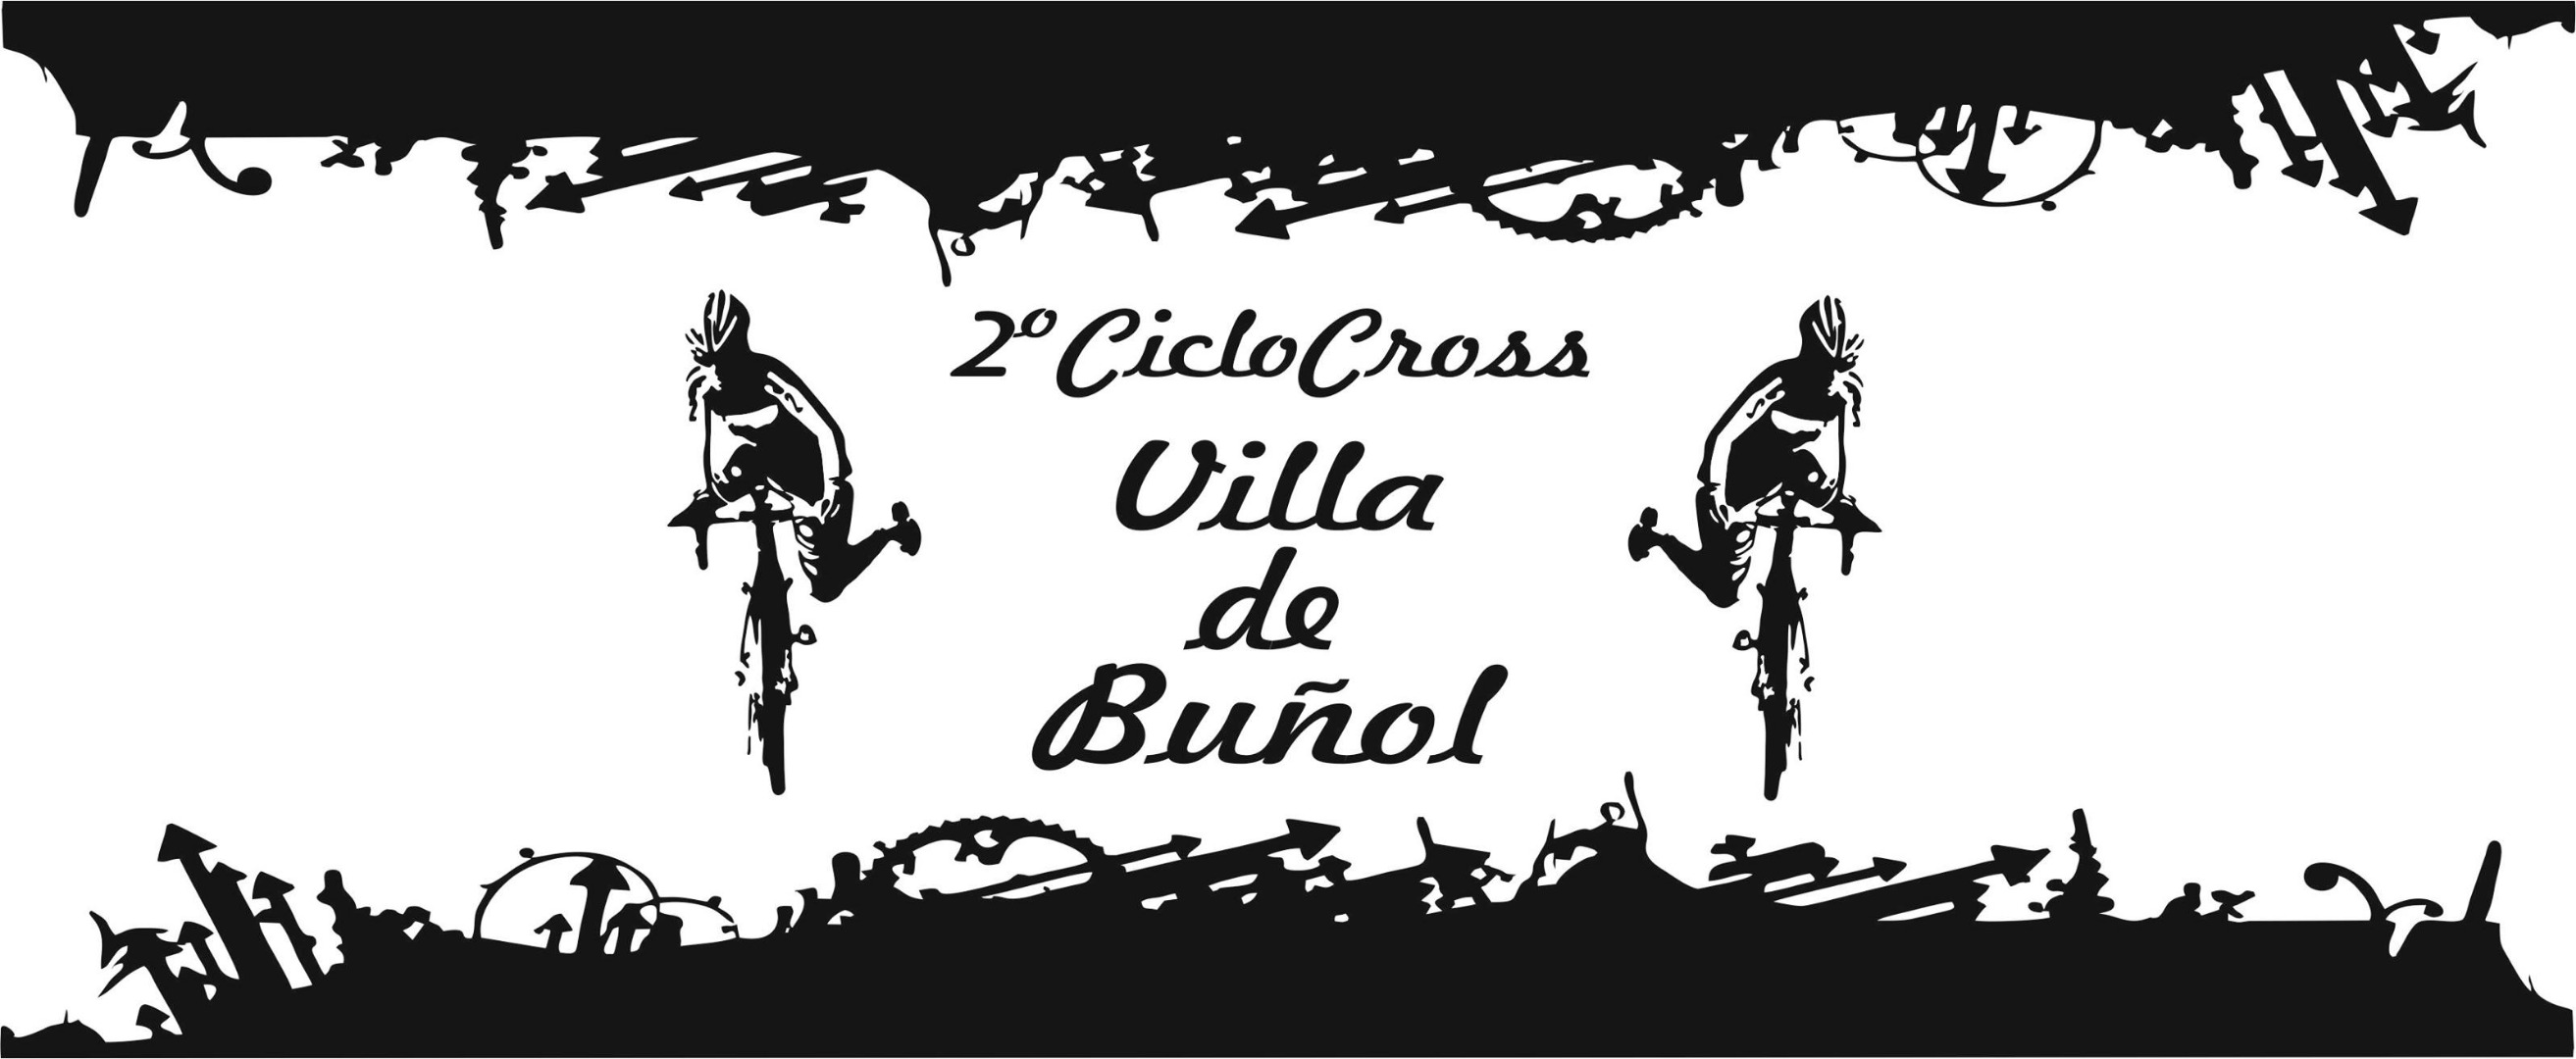 2º Ciclocross Villa de Buñol